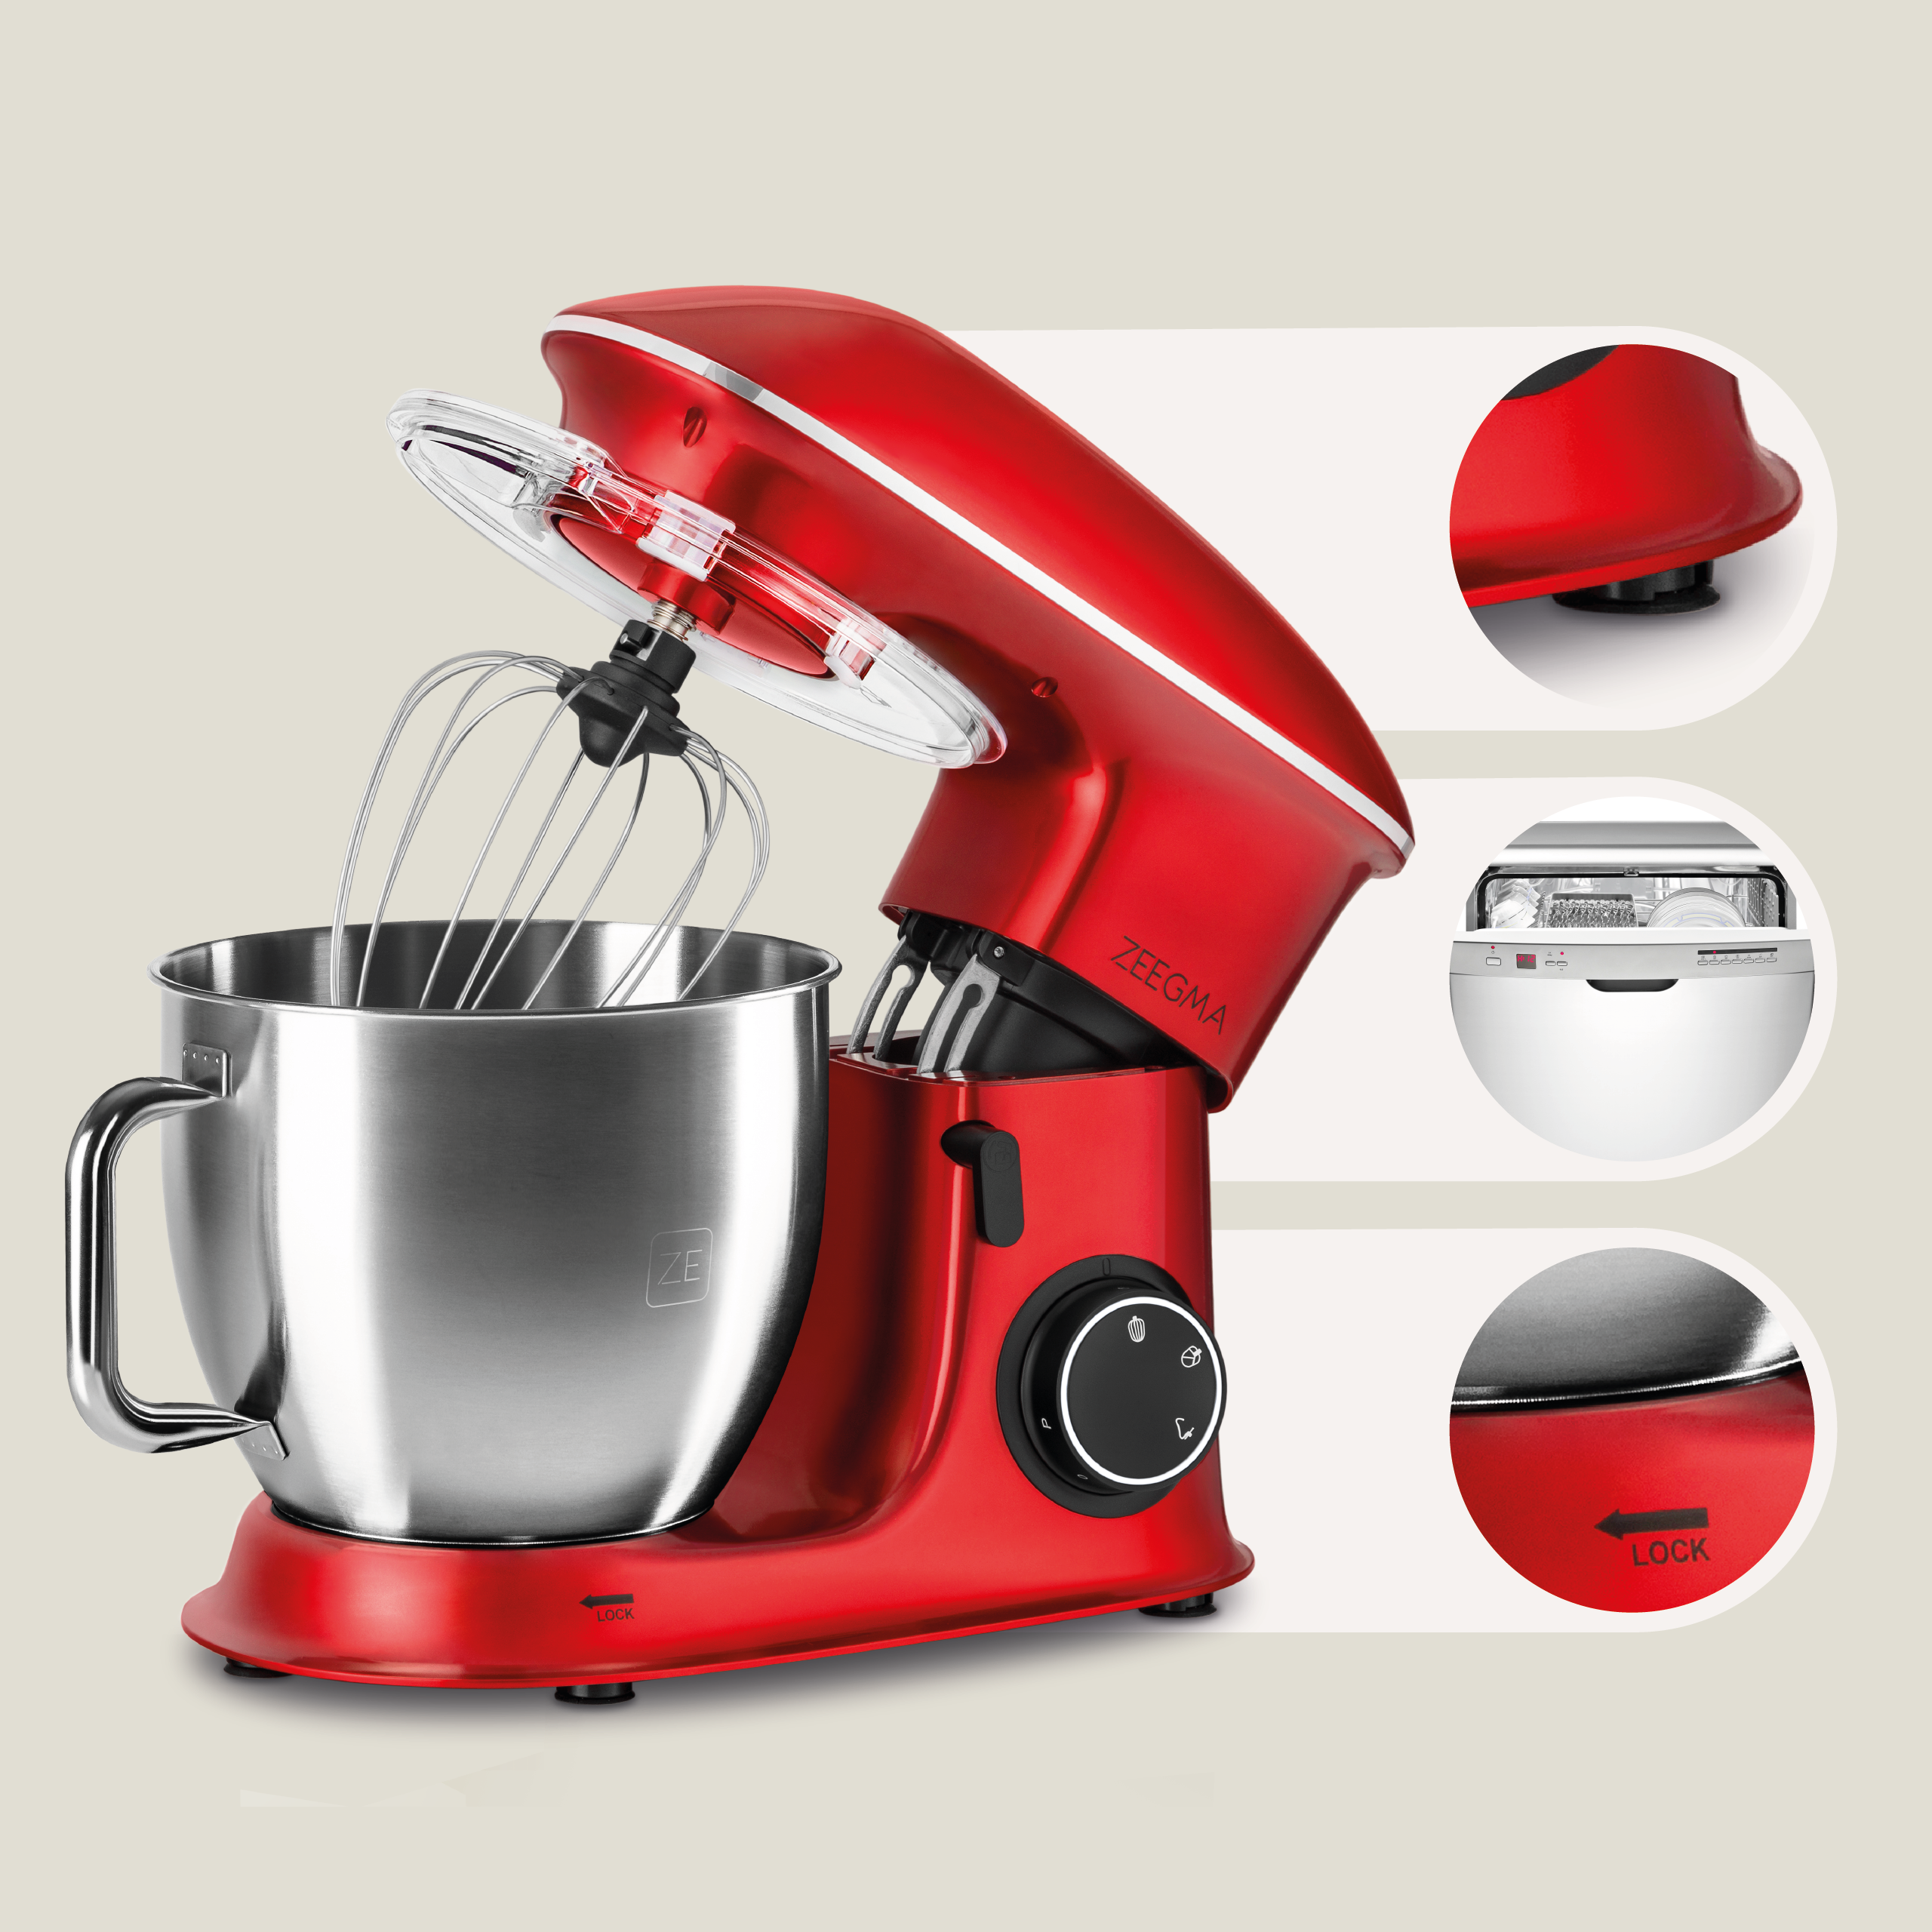 Liter, Planeet 6,5 Rot Chef 1500 Küchenmaschine ZEEGMA Watt) (Rührschüsselkapazität: